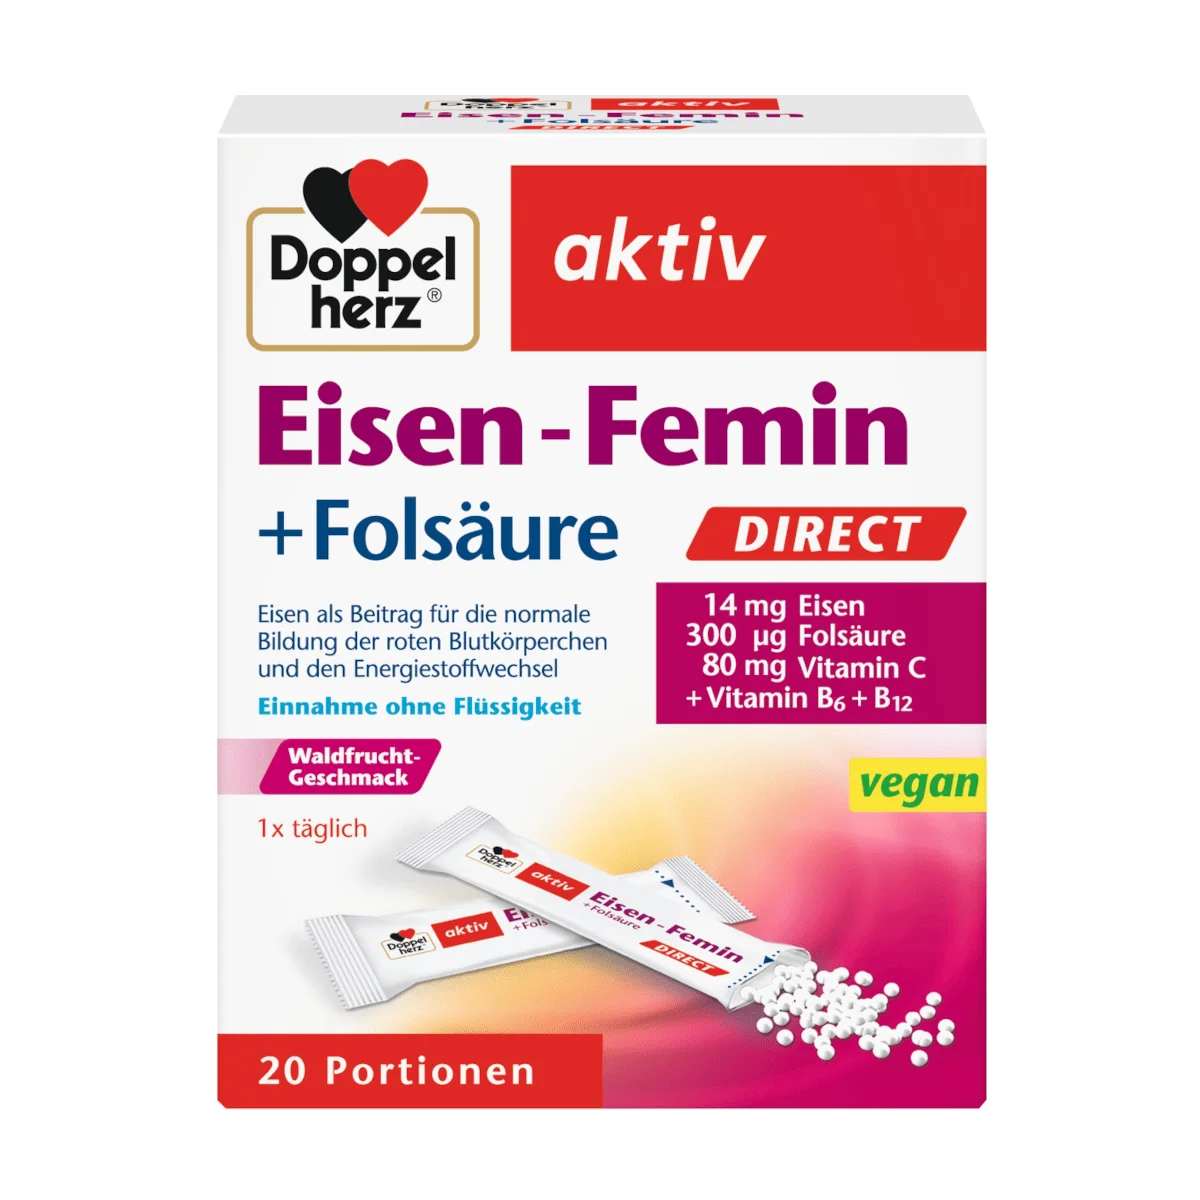 Doppelherz Eisen-Femin + Folsäure direct, 20 Port